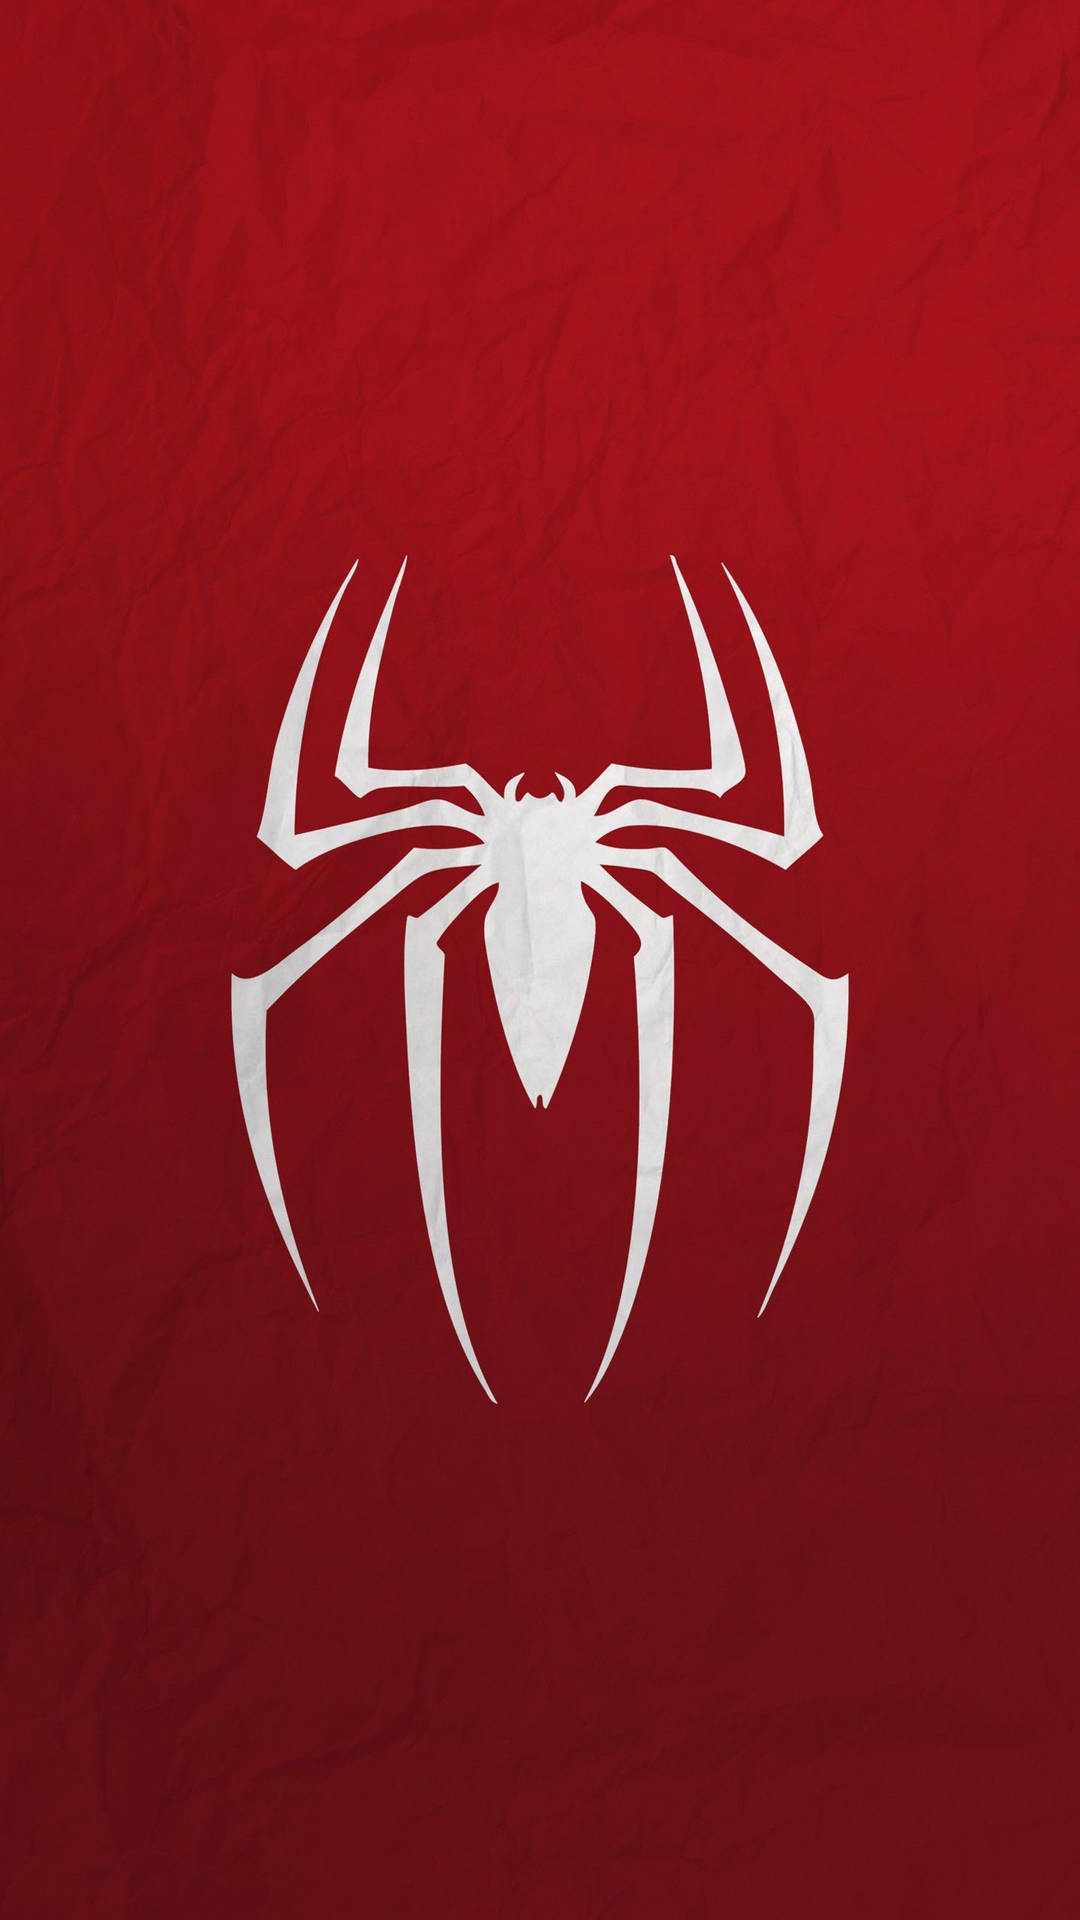 1080x1920 Download Superhero Logo Of Spider-man Wallpaper